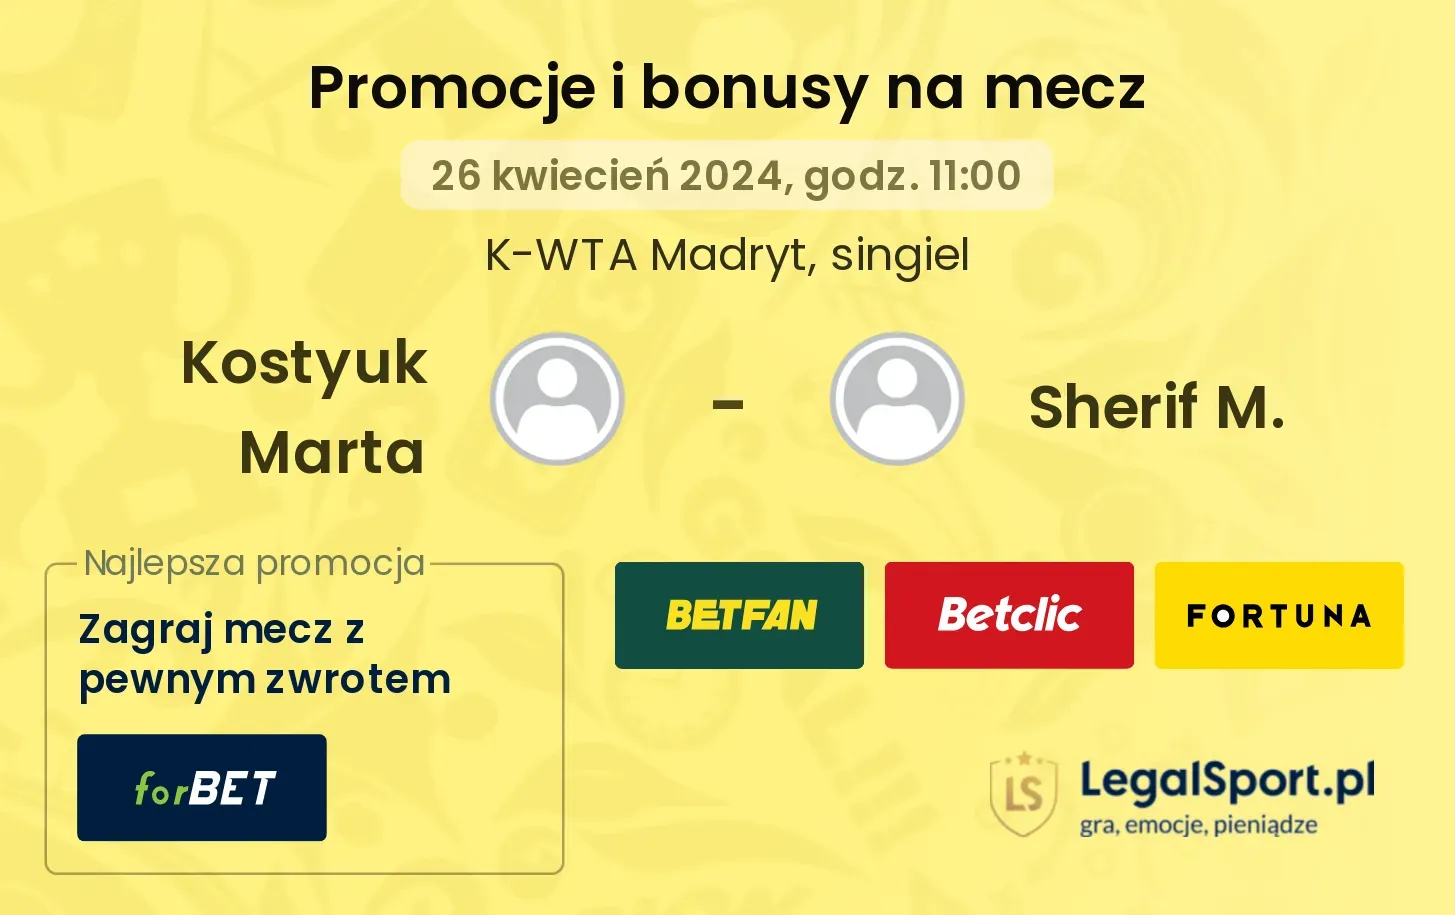 Kostyuk Marta - Sherif M. promocje bonusy na mecz